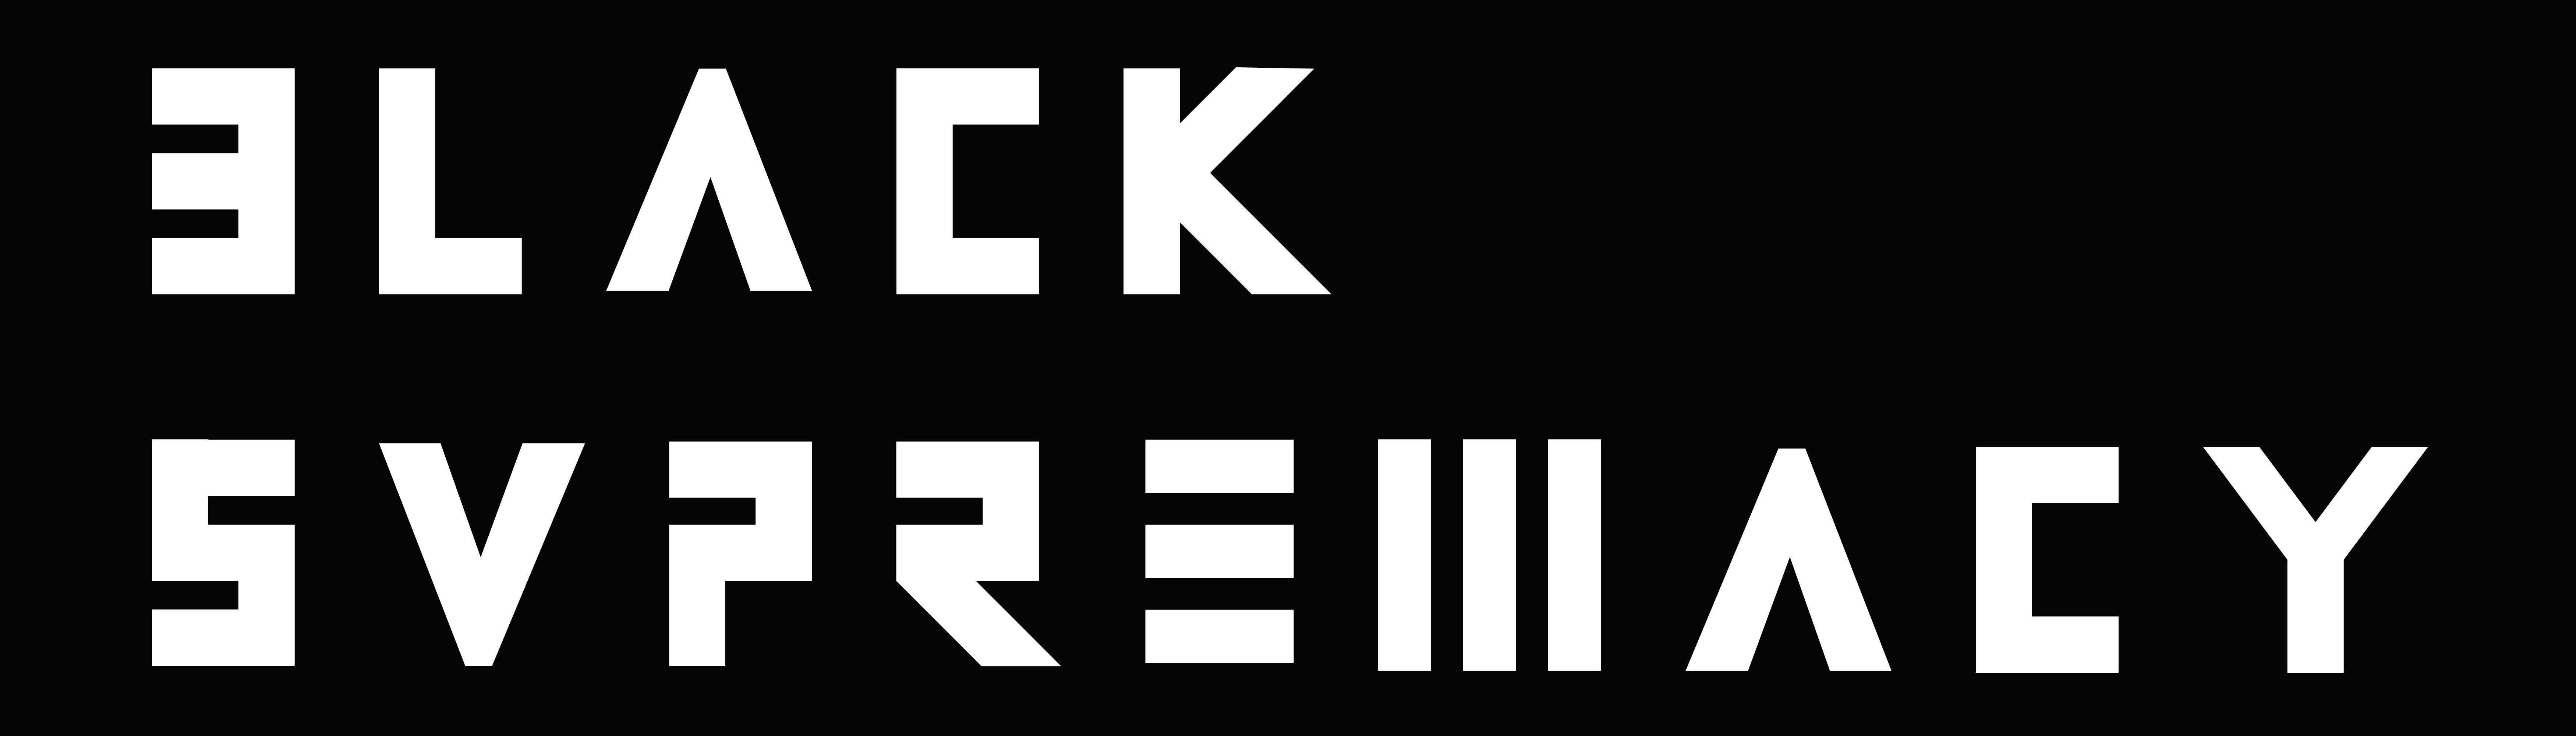 Black Supremacy Logo - BS logo black - S A M A E L official website